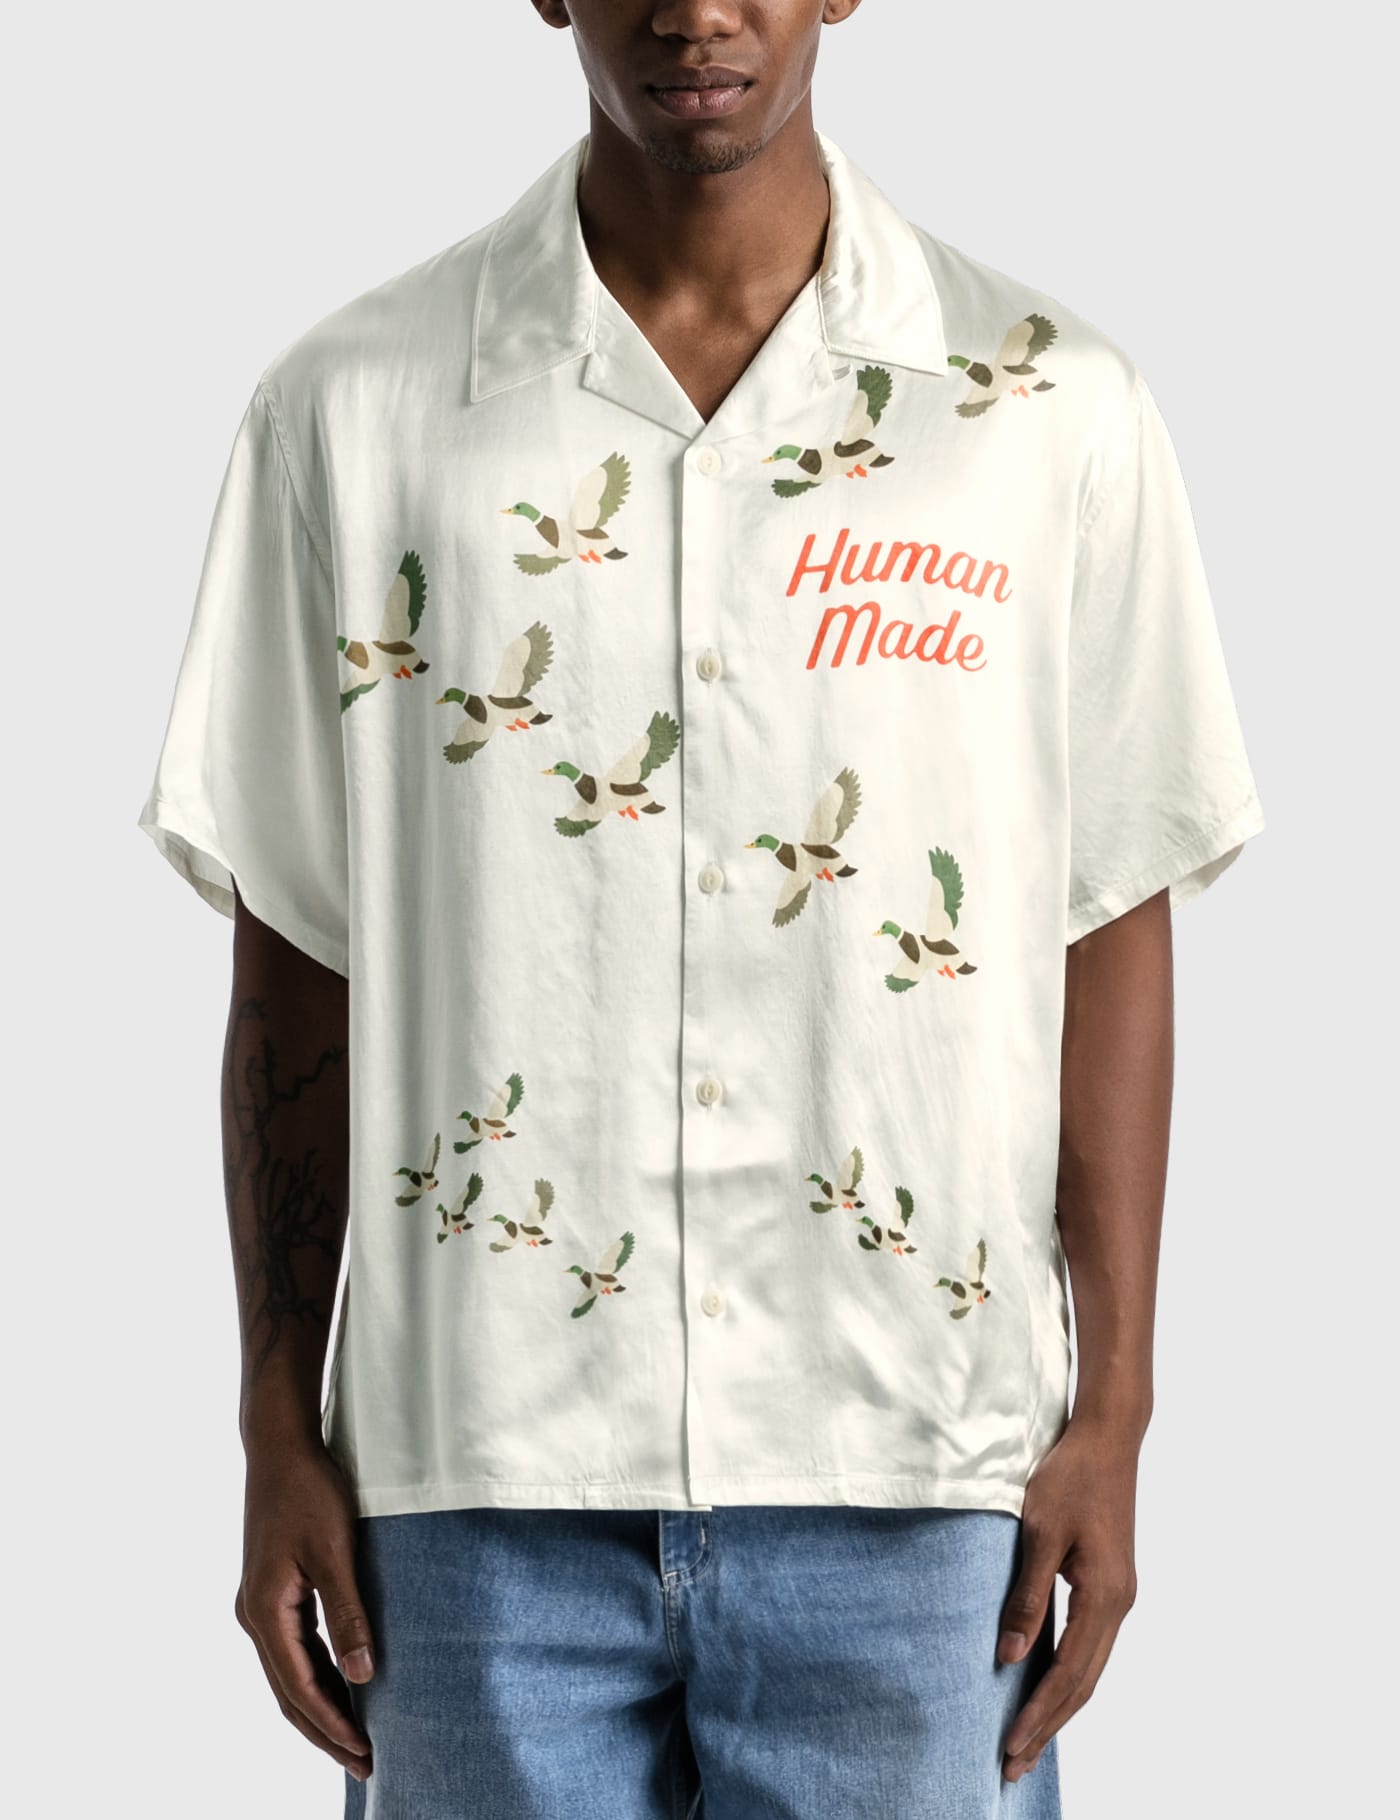 Human Made - Aloha Shirt | HBX - Globally Curated Fashion and 